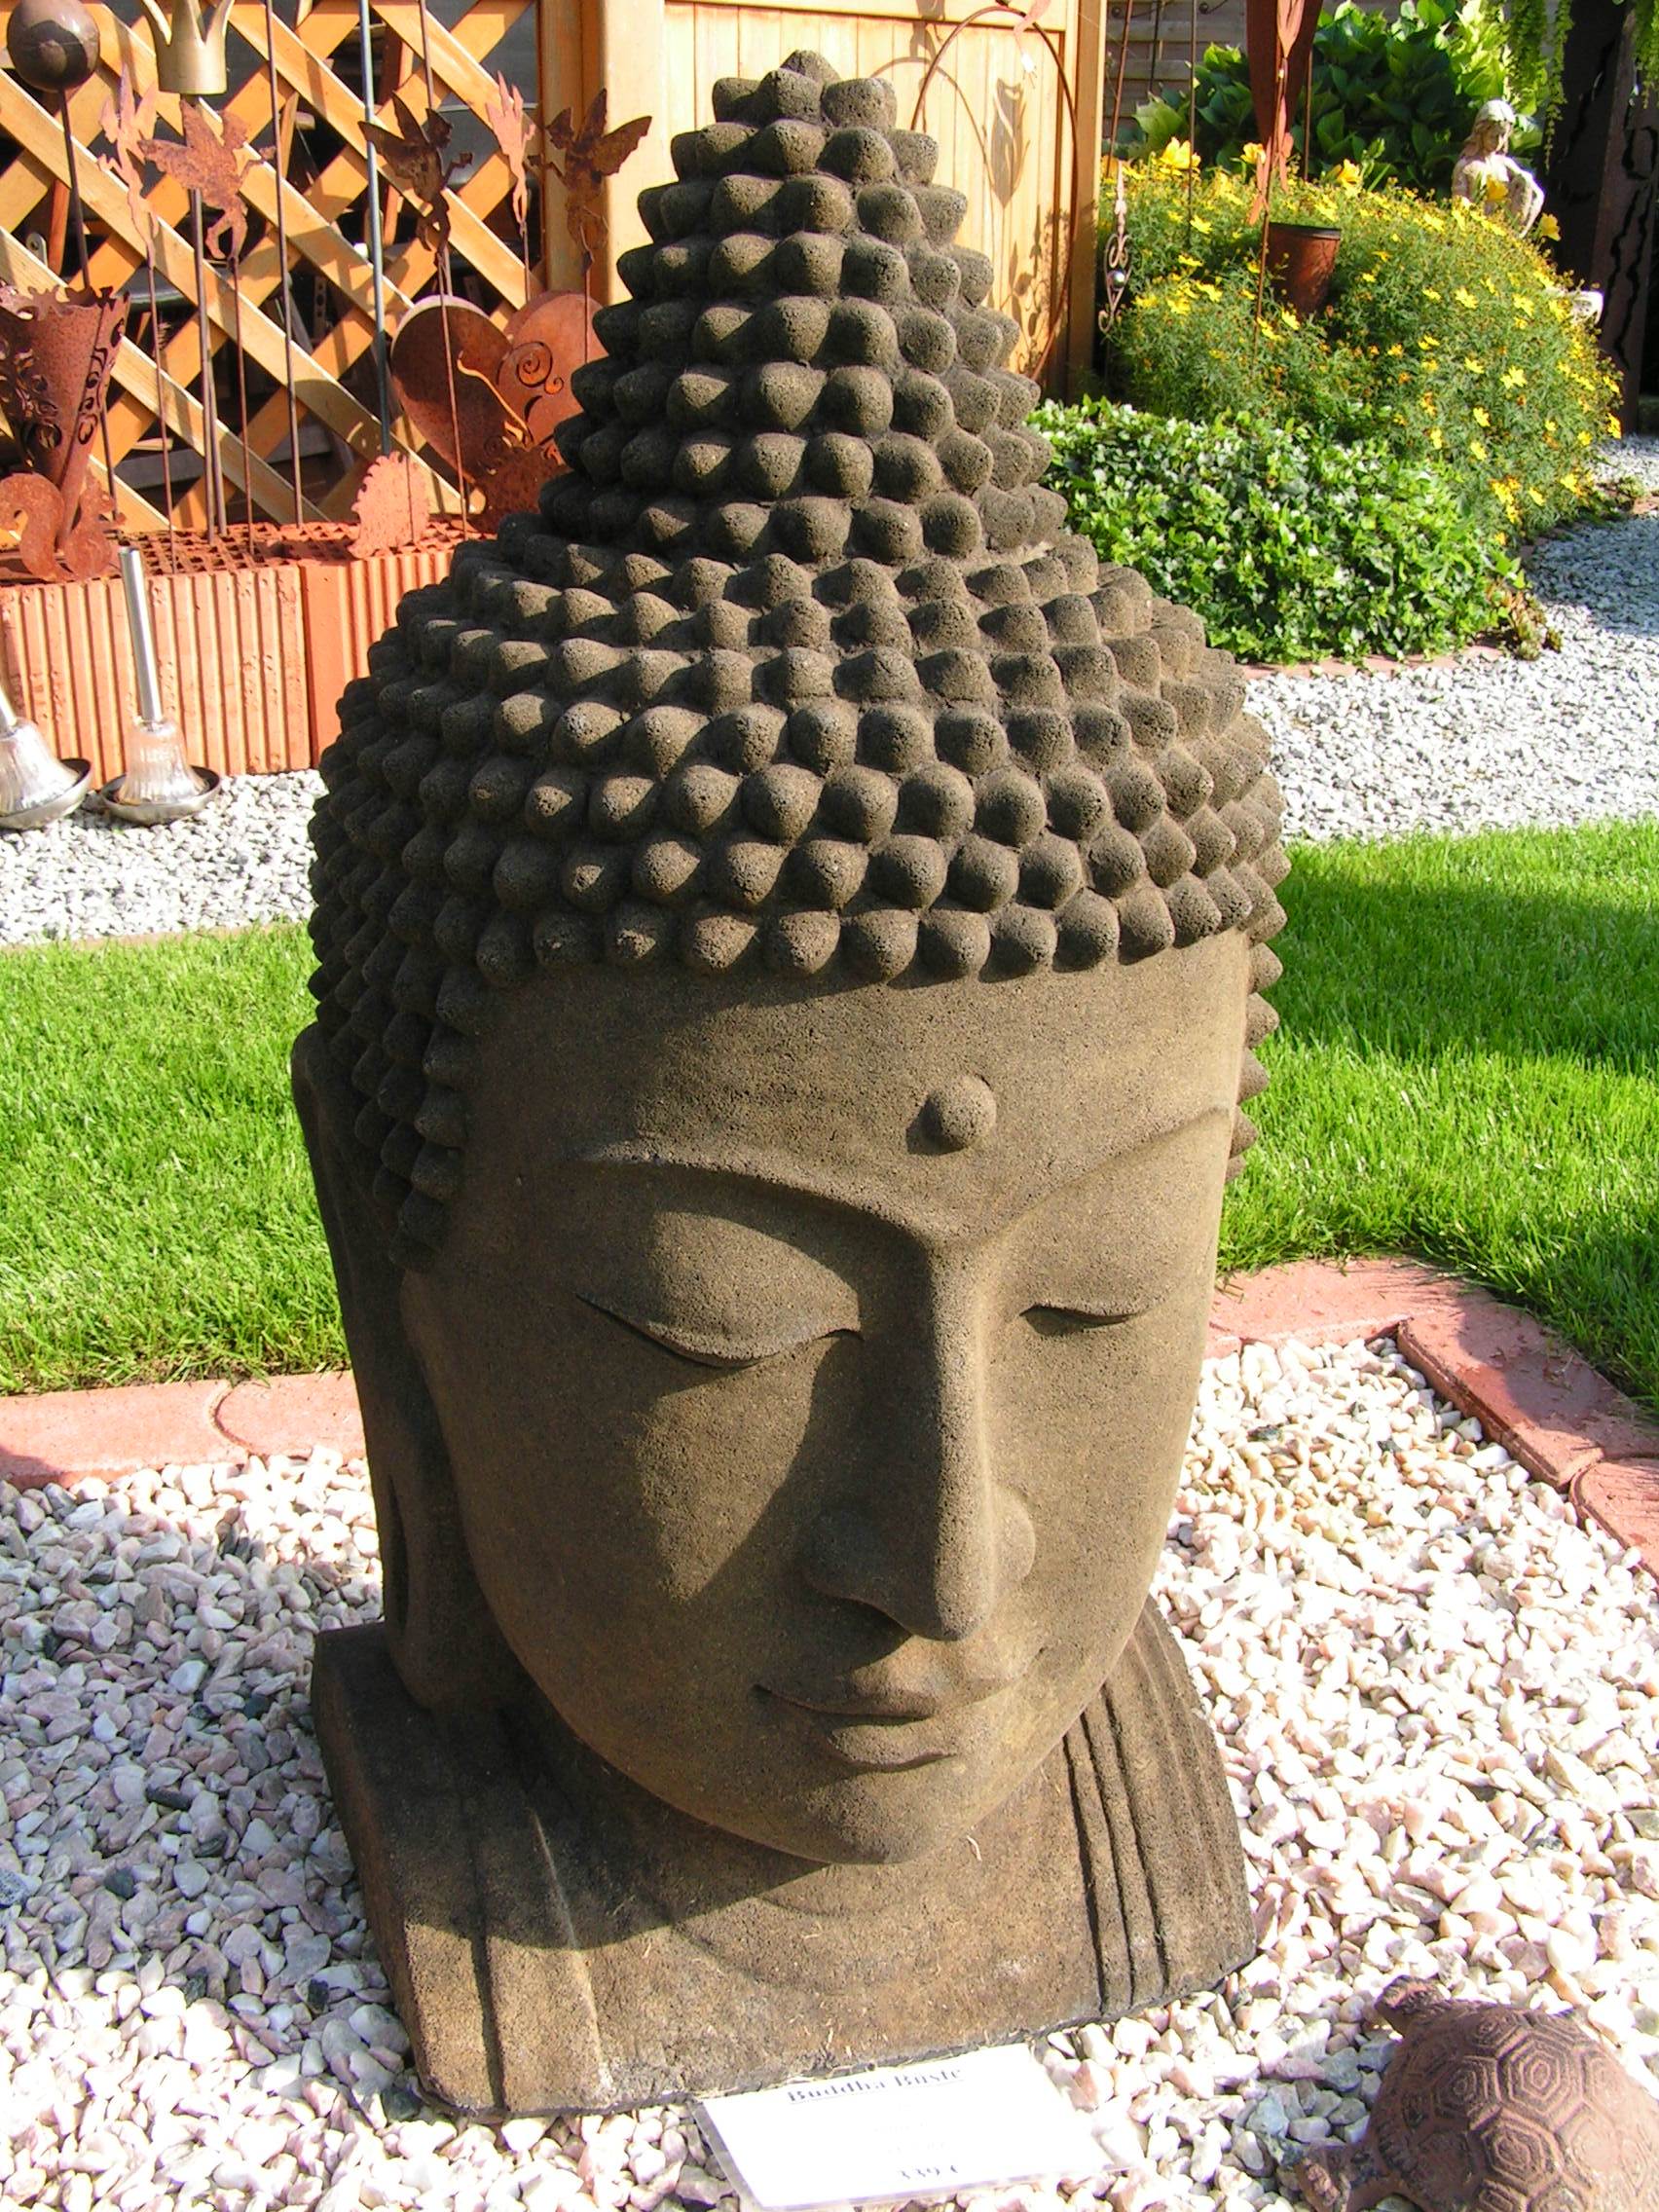 Kuh mit Kalb - Gartendekoration Hauner Steinfiguren Buddha uvm.